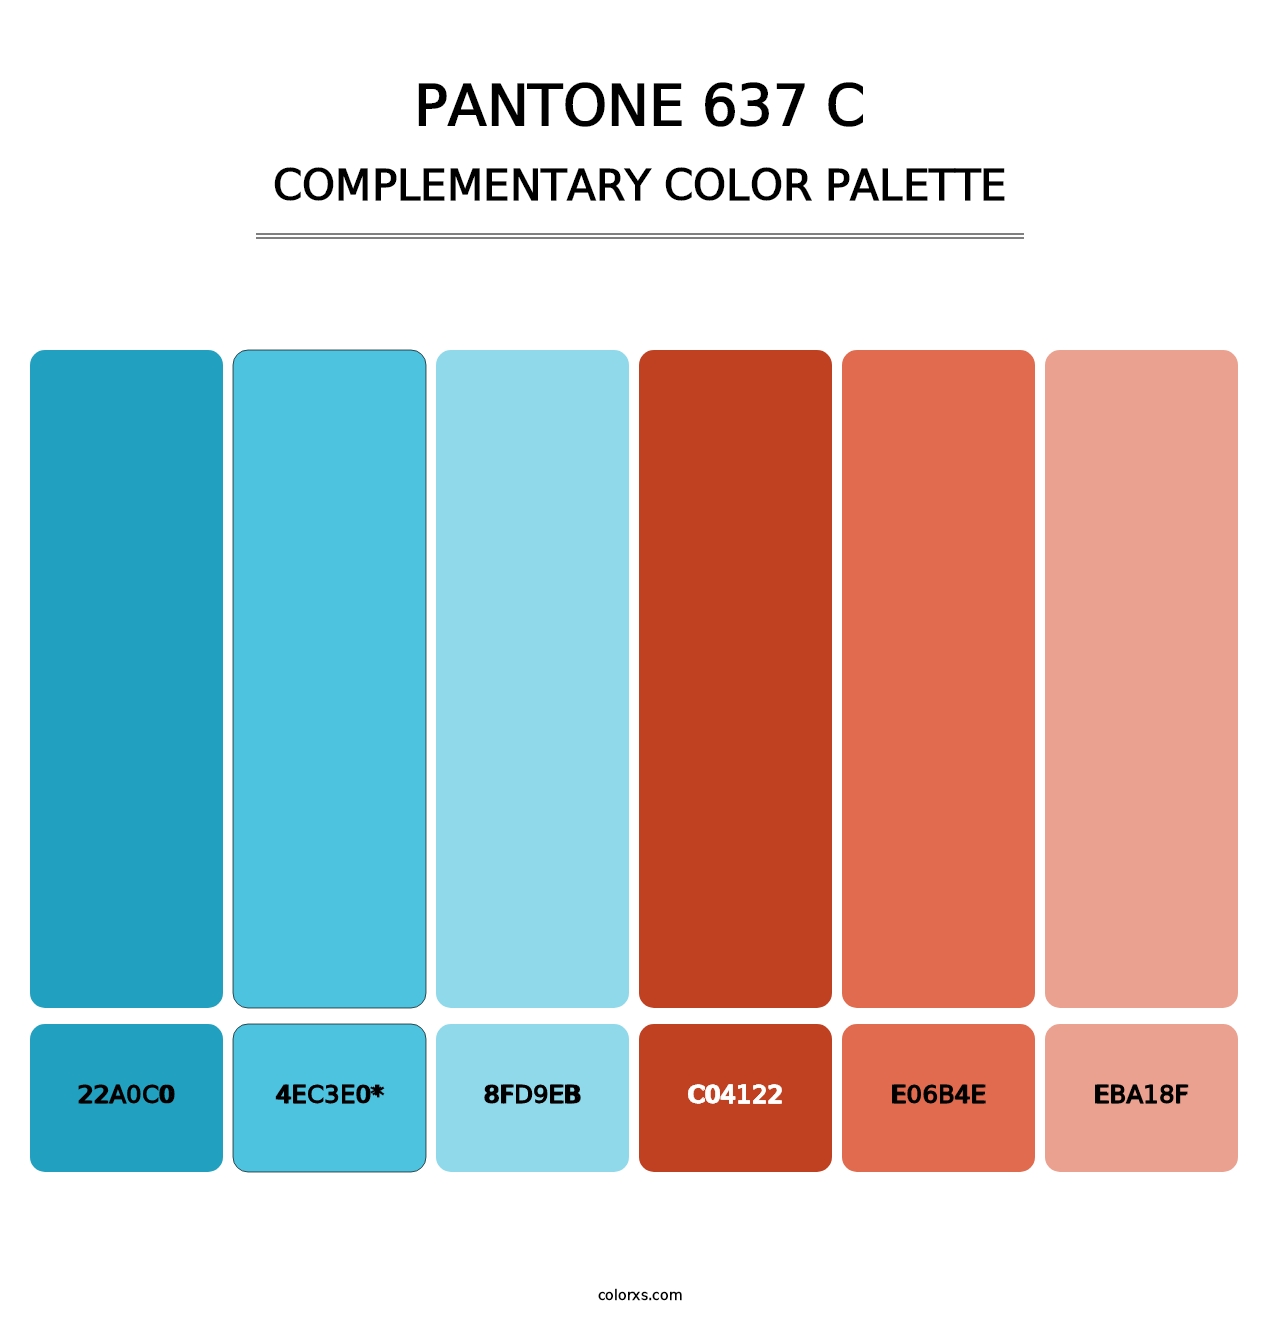 PANTONE 637 C - Complementary Color Palette